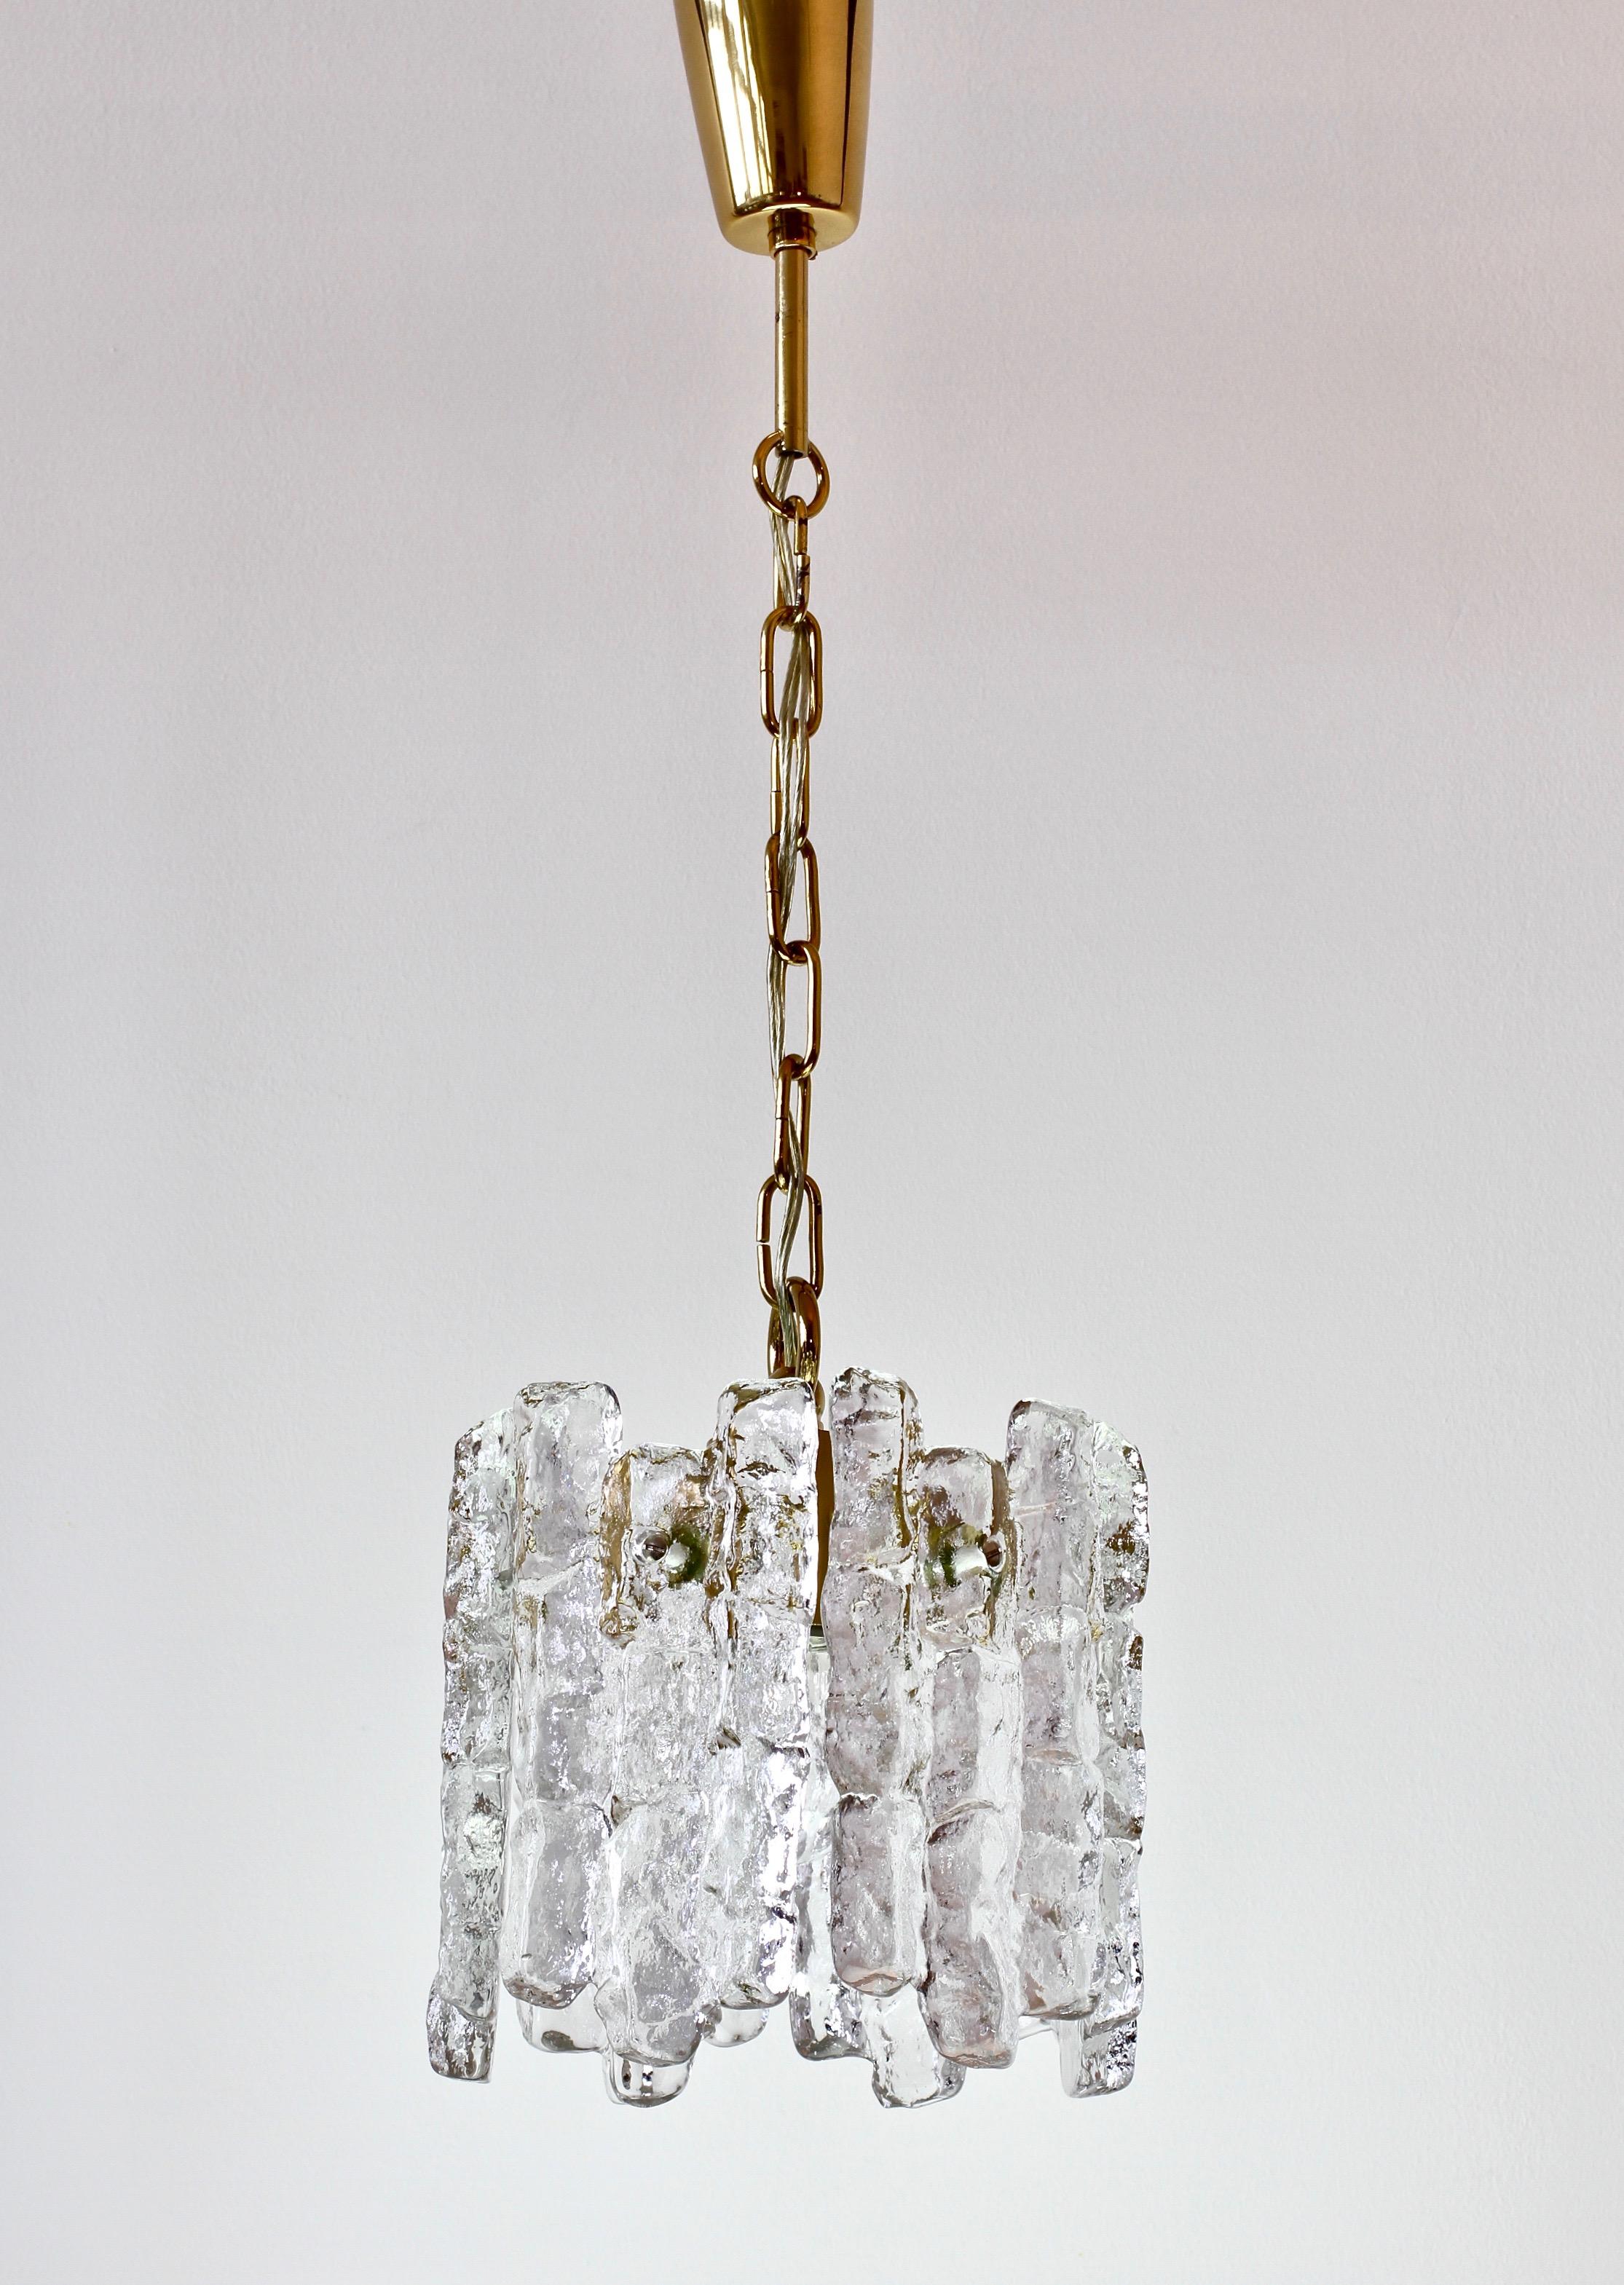 Austrian Mid-Century Kalmar Ice Crystal Glass and Brass Pendant Light or Chandelier 1960s